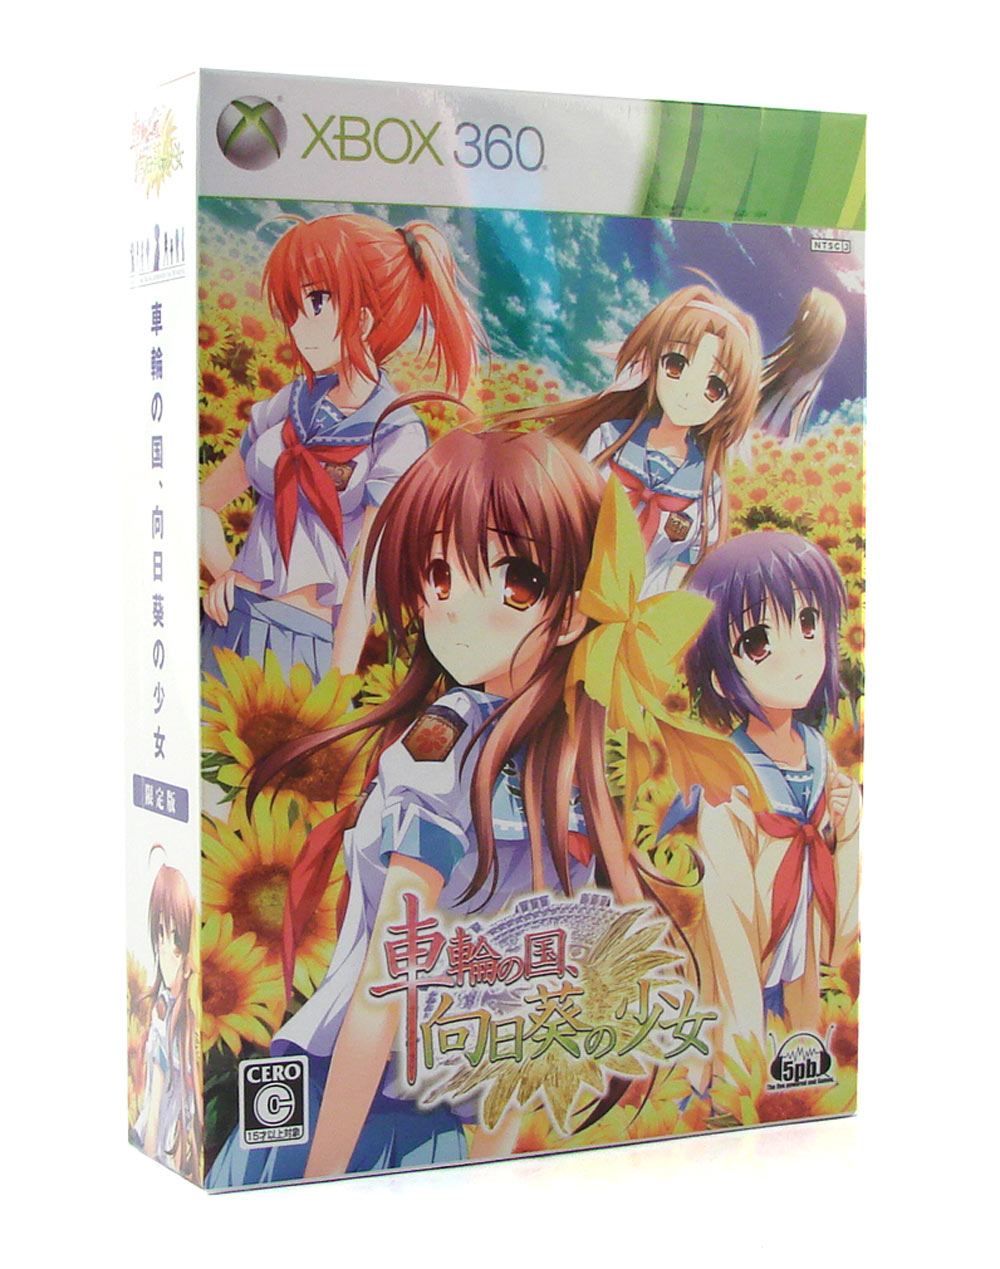  Anime Games Xbox 360